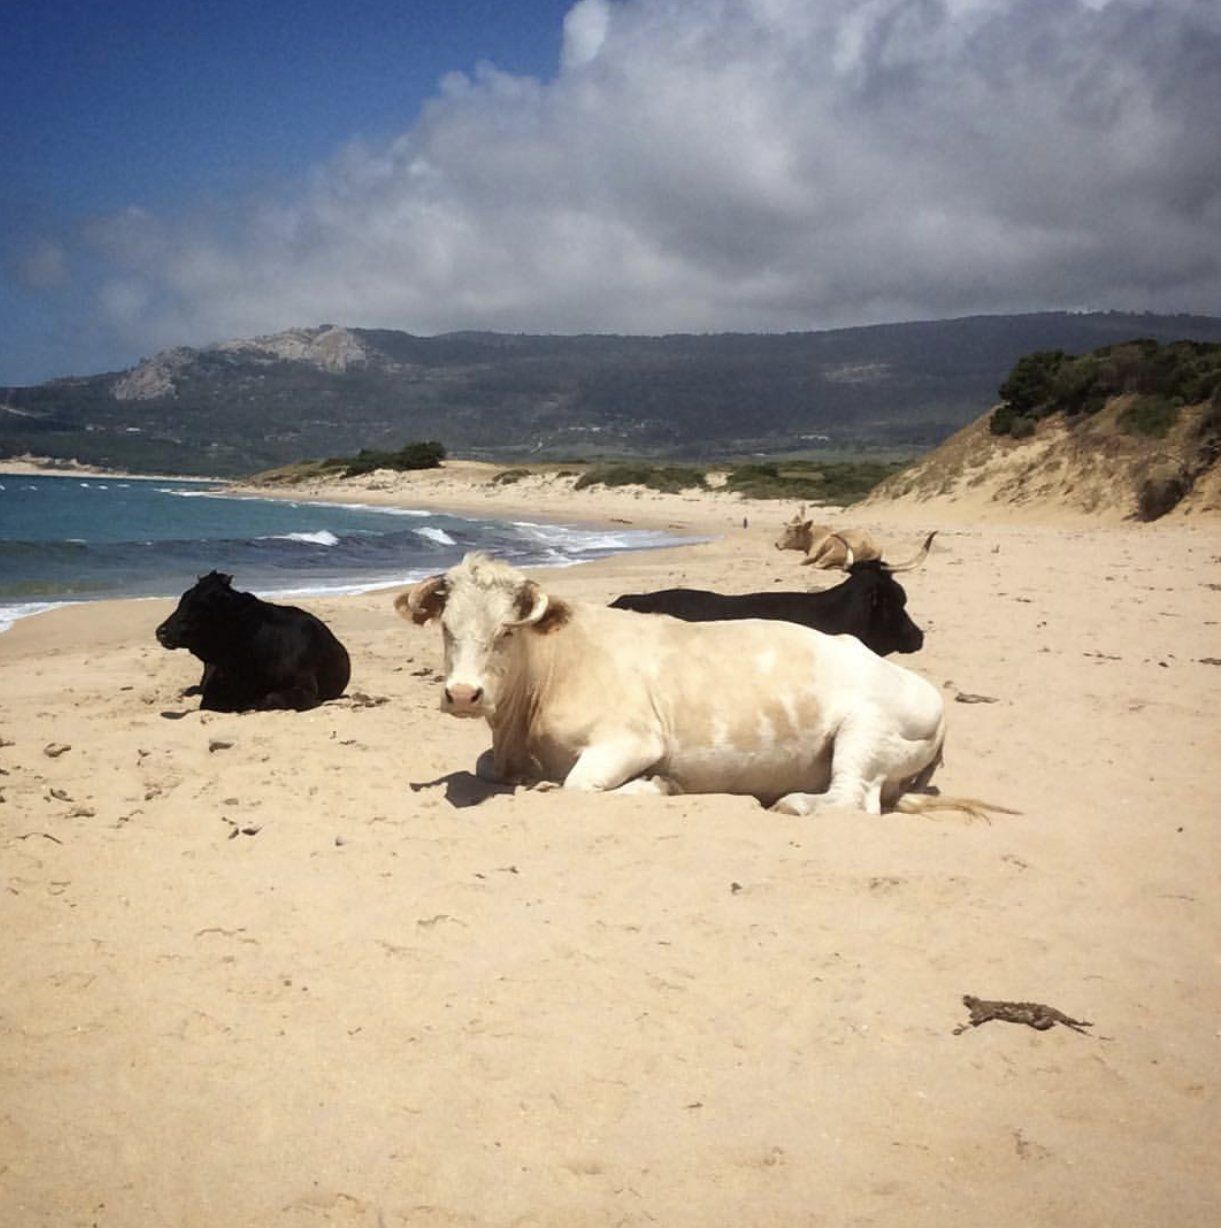 Spanish cows on beach by sea